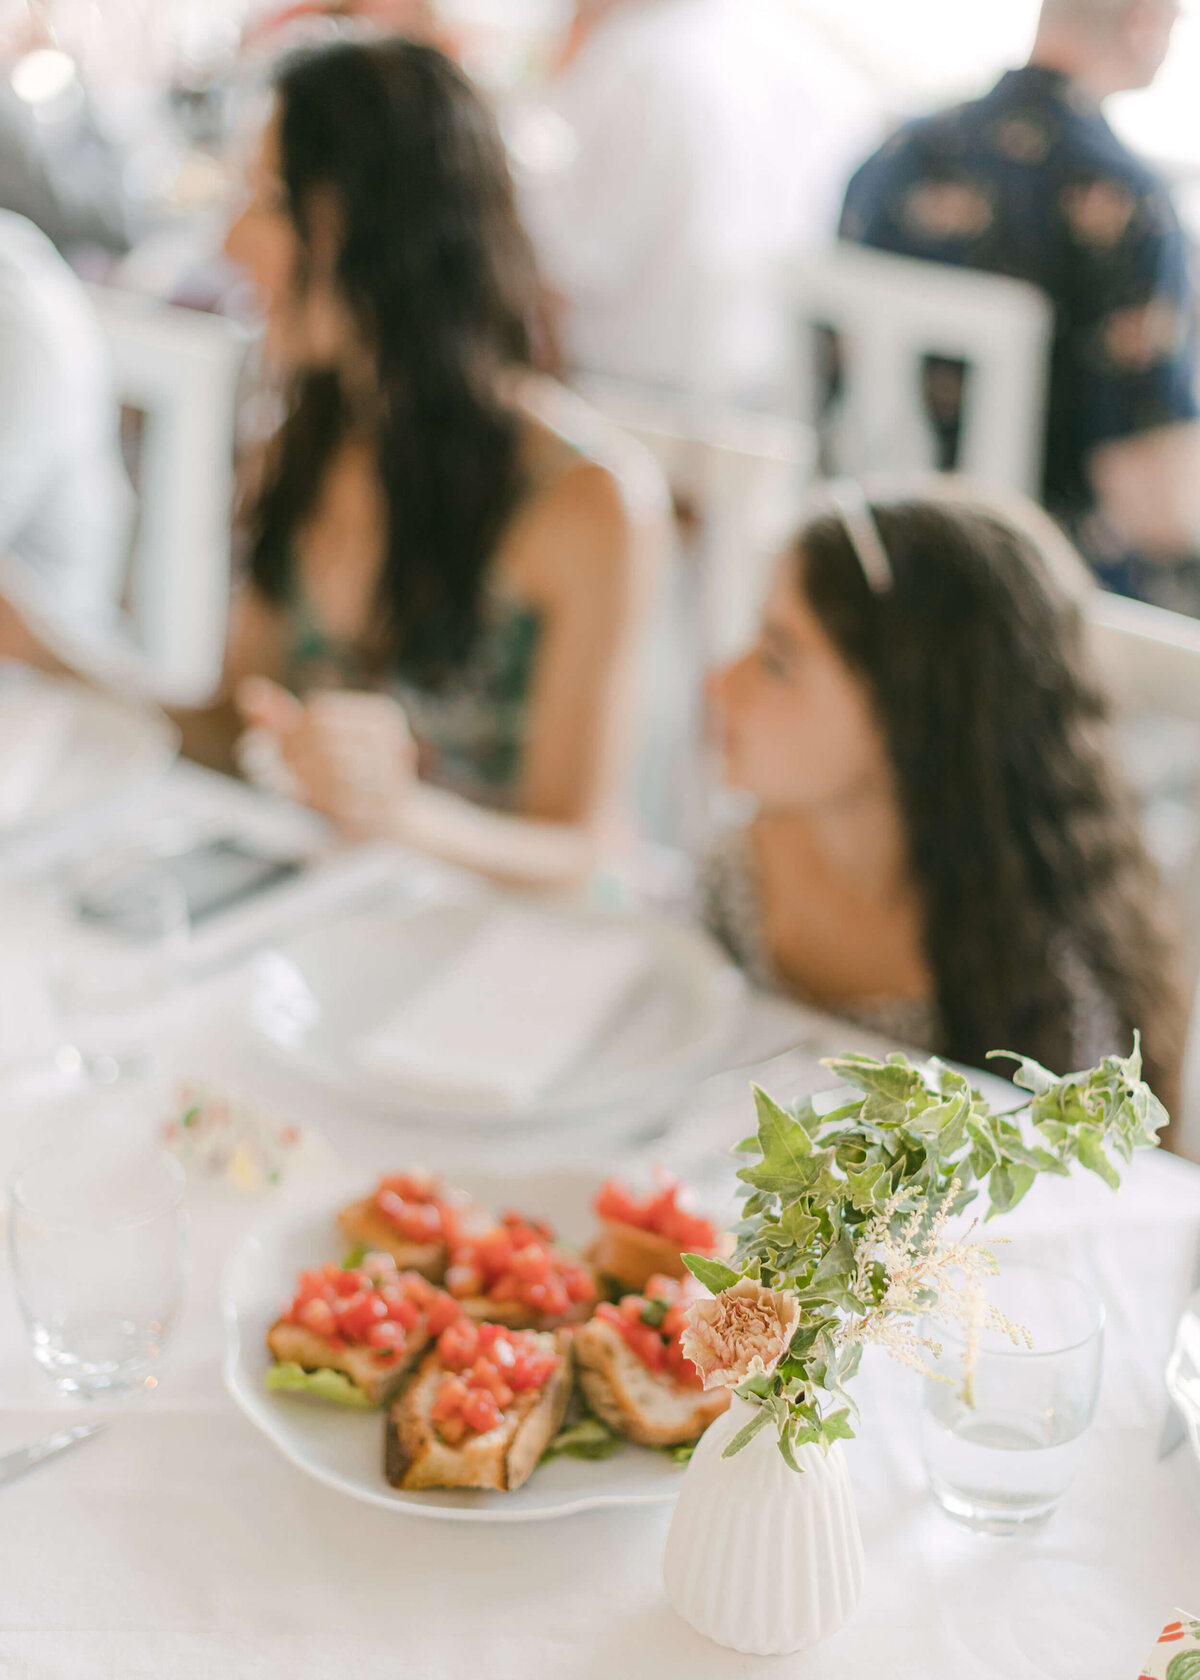 chloe-winstanley-italian-wedding-positano-welcome-dinner-table-bruschetta